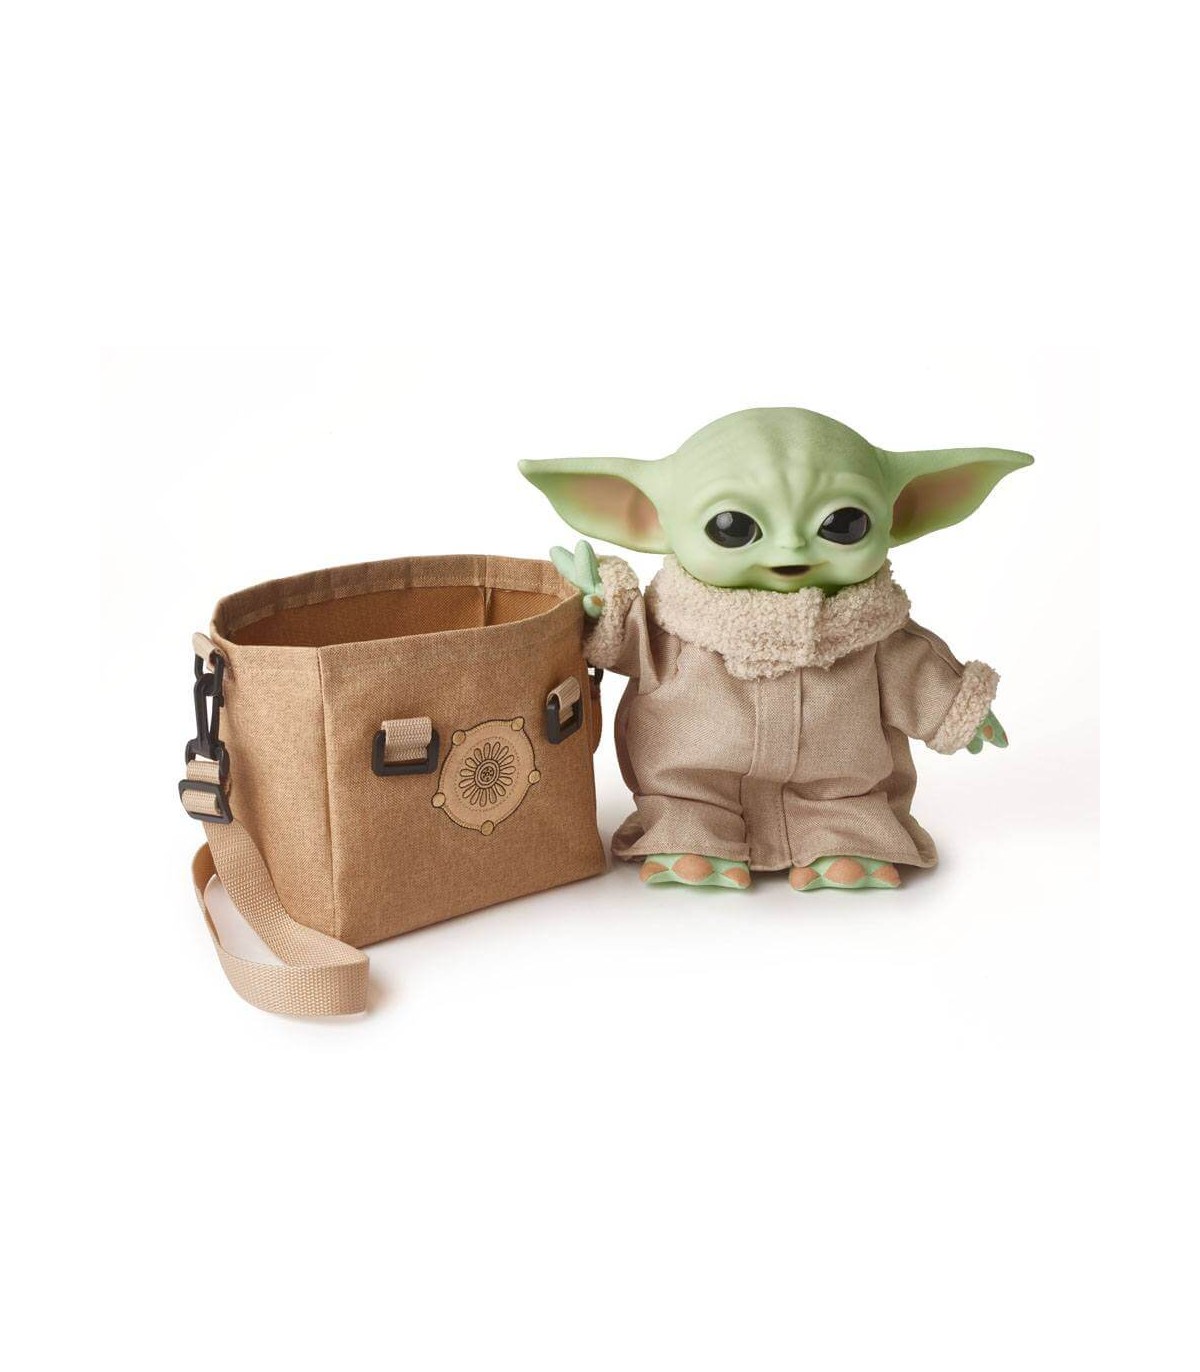 The Child Baby Yoda Peluche Electronico Con Bandolera Star Wars The  Mandalorian